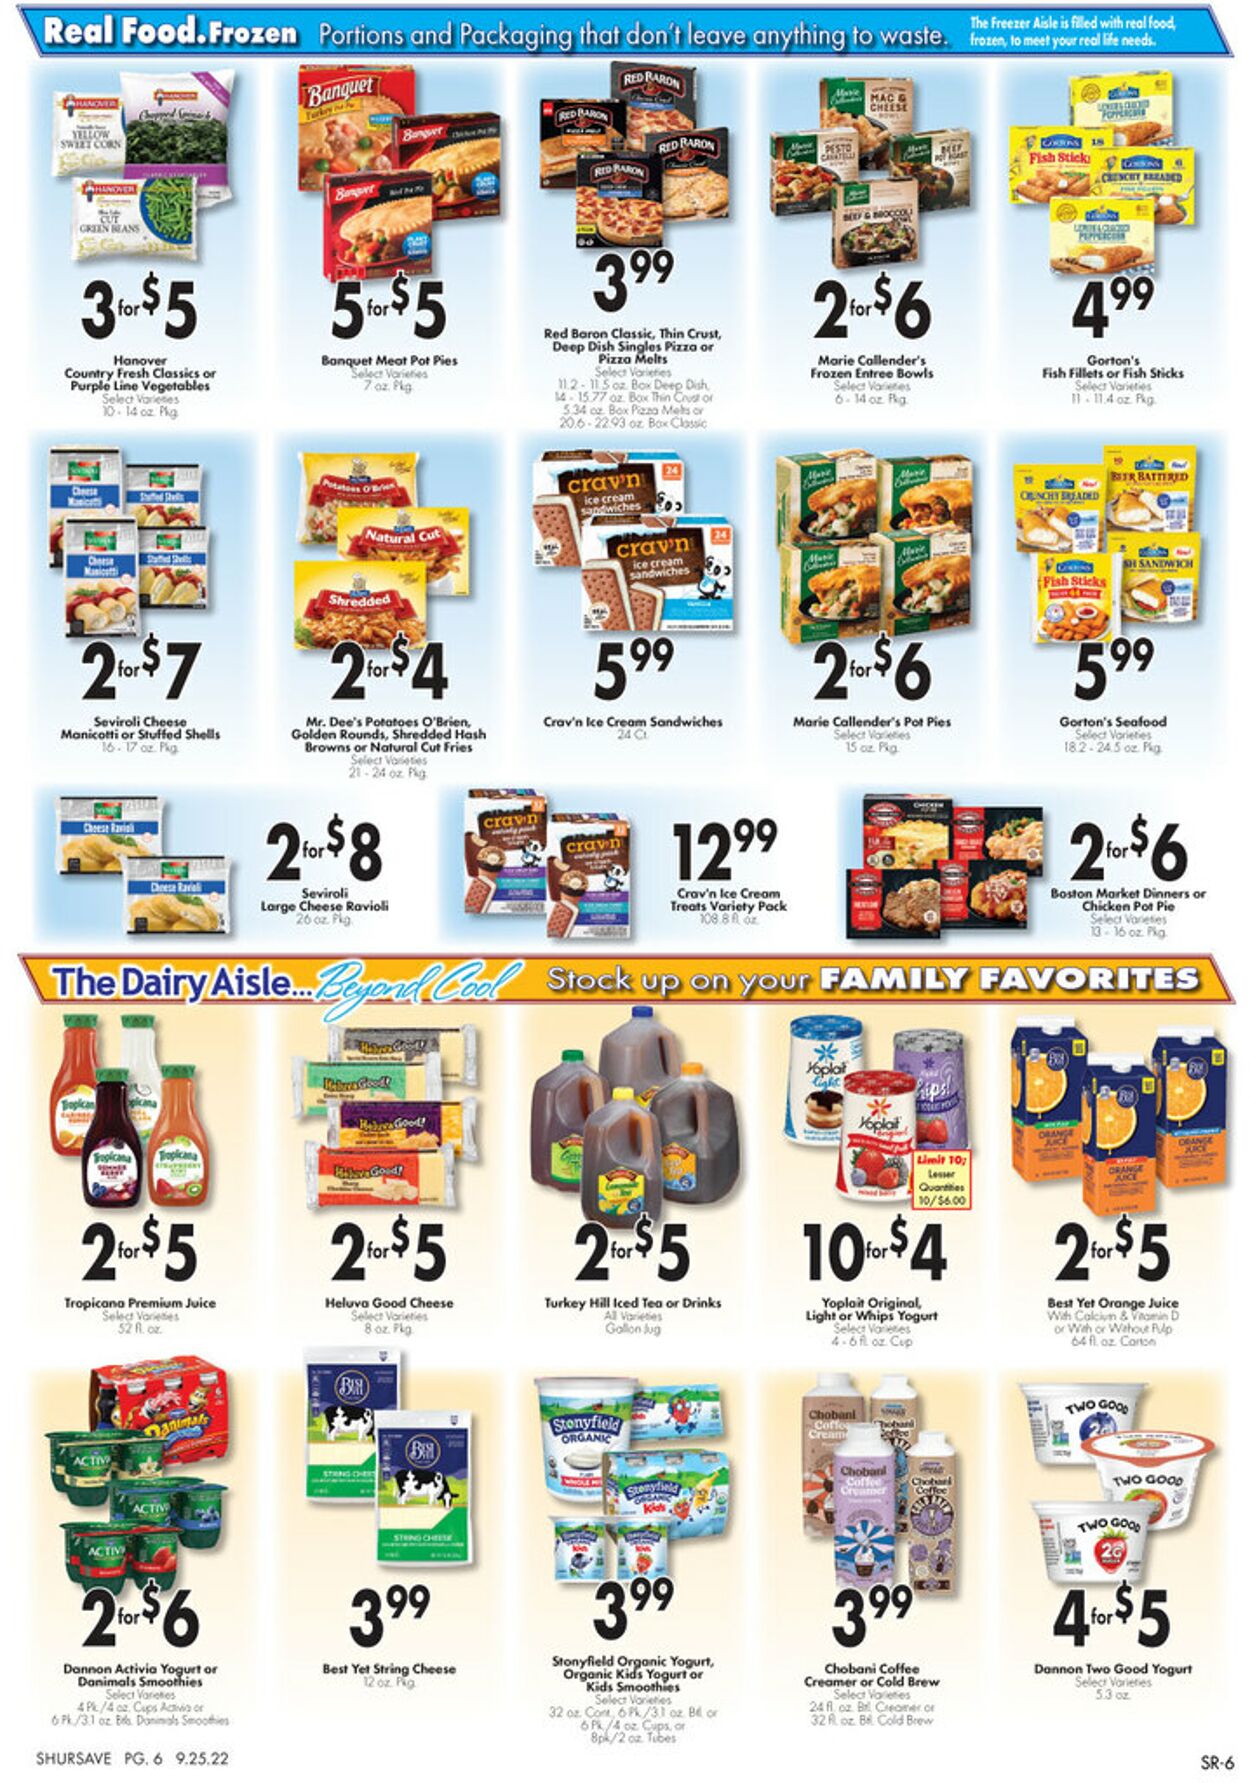 Weekly ad Gerrity's Supermarkets 09/25/2022 - 10/01/2022